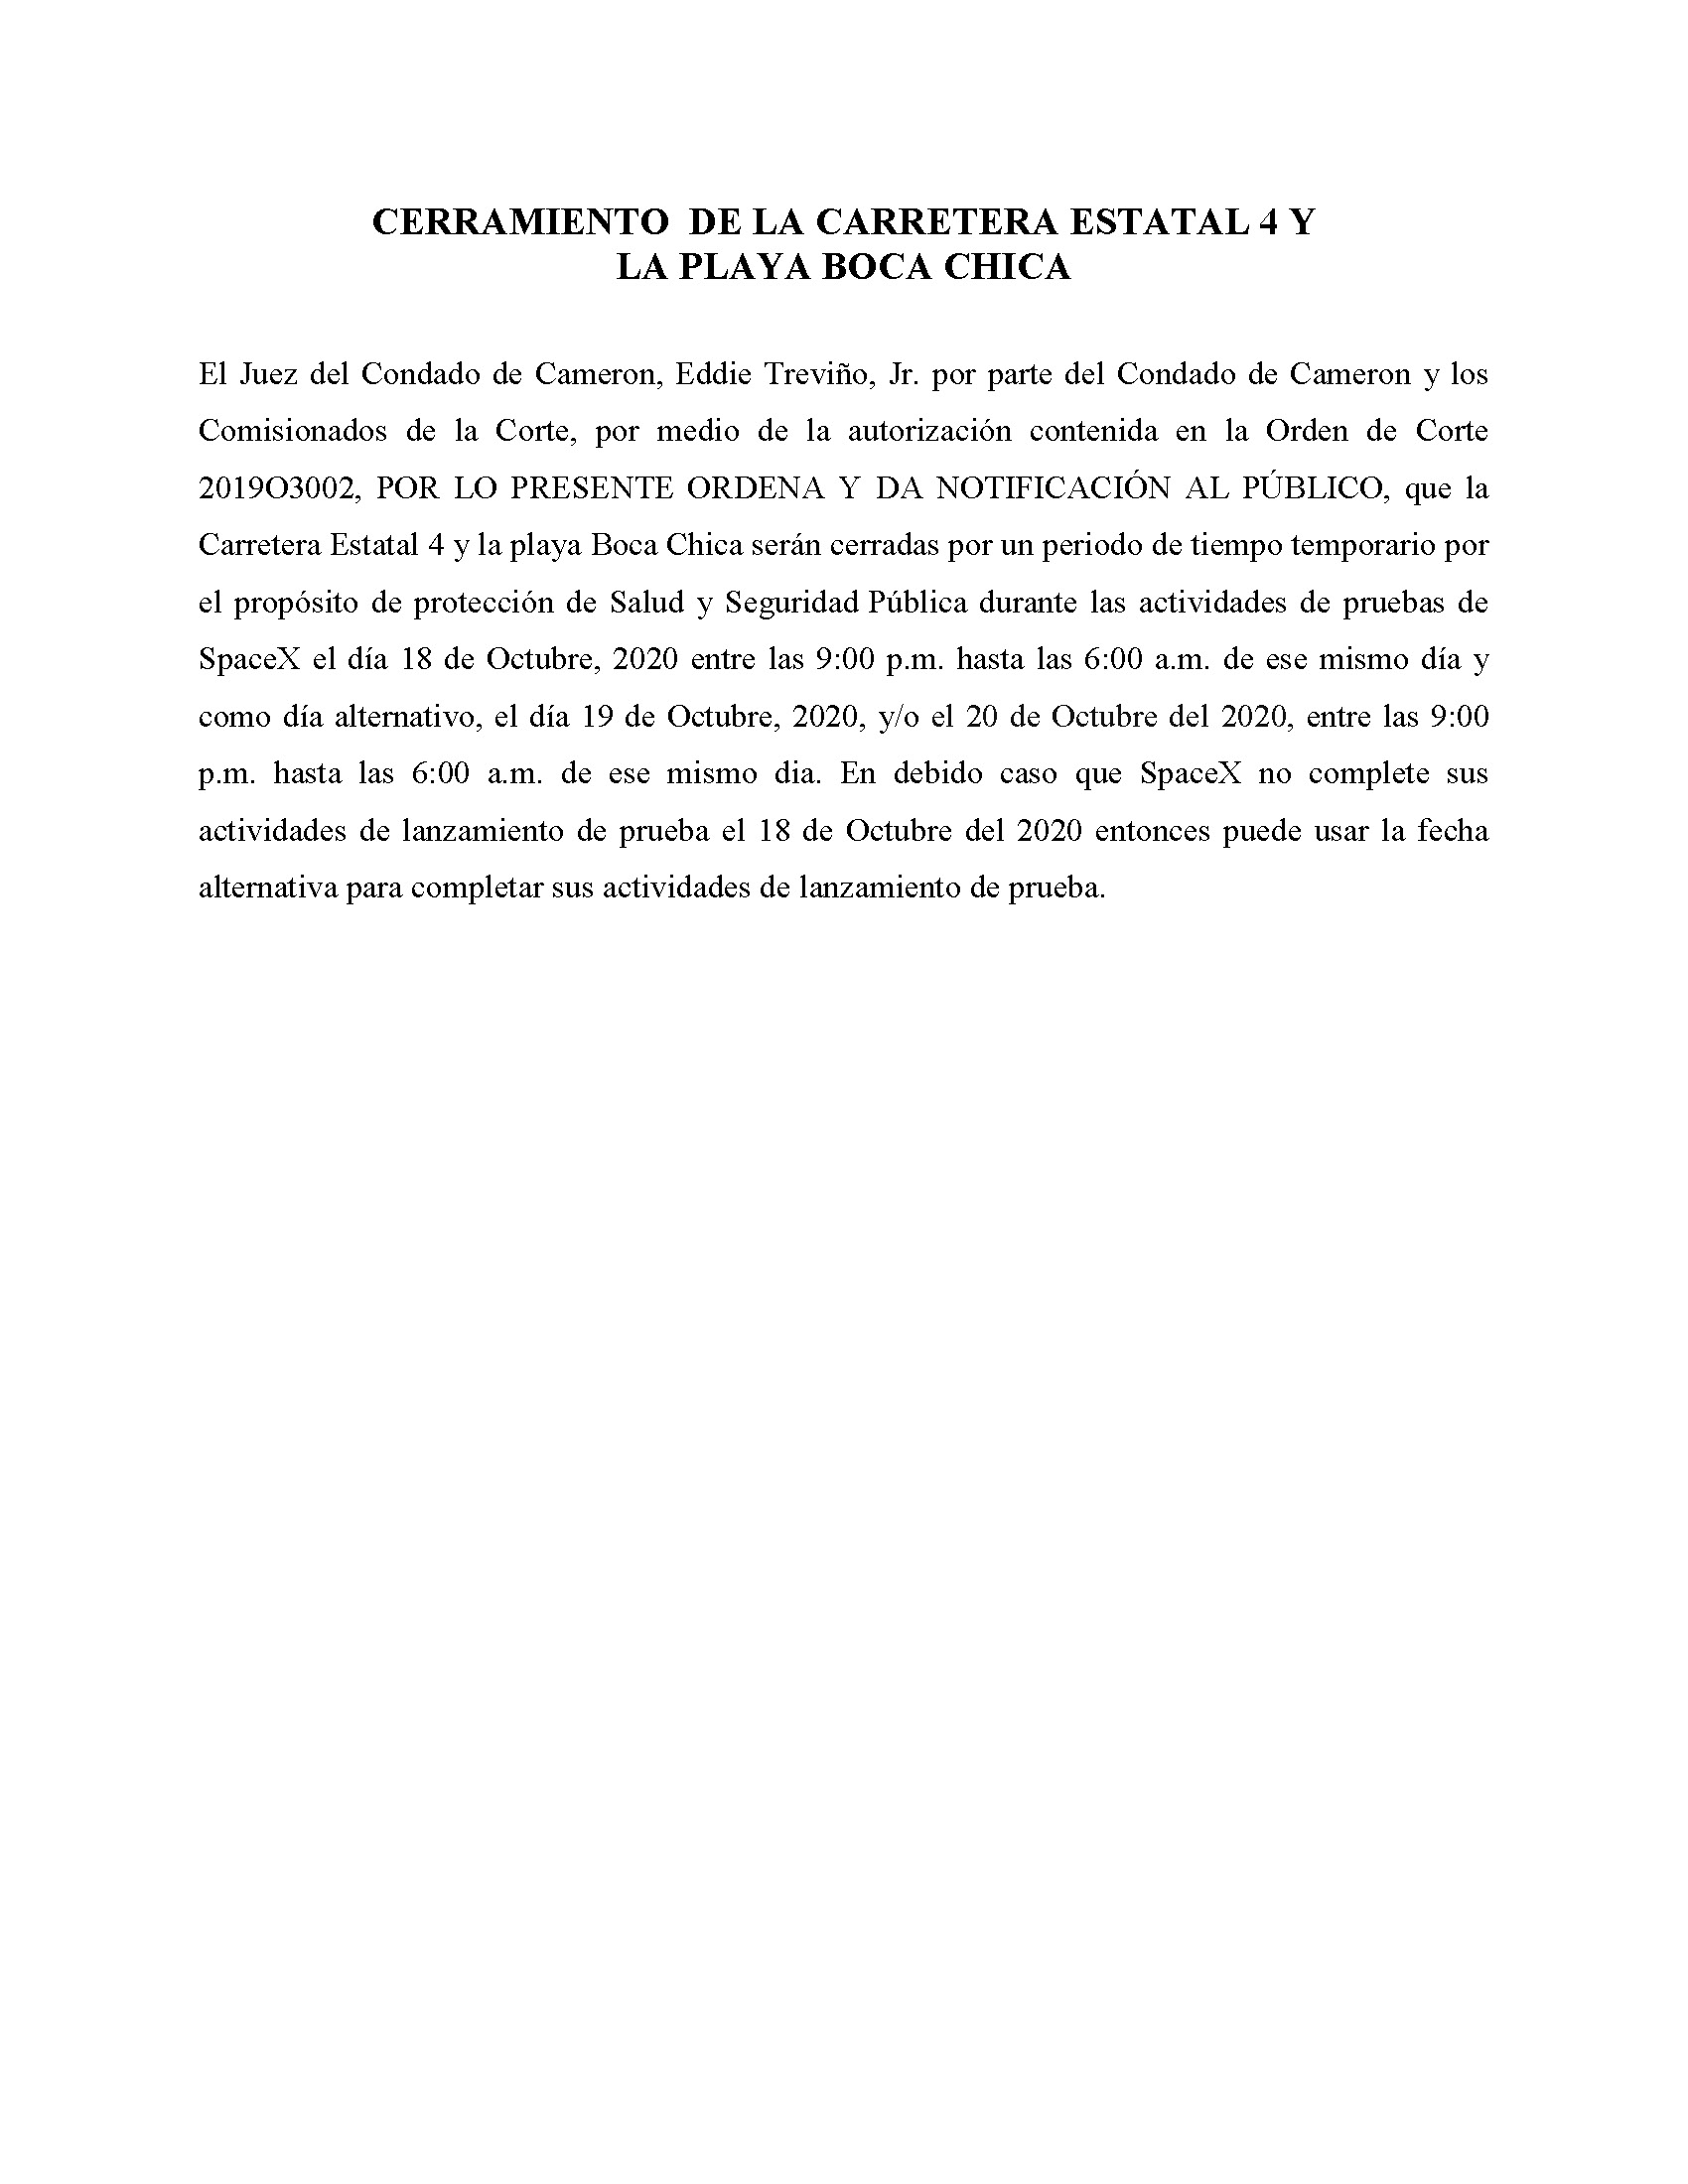 ORDER.CLOSURE OF HIGHWAY 4 Y LA PLAYA BOCA CHICA.SPANISH.10.18.20